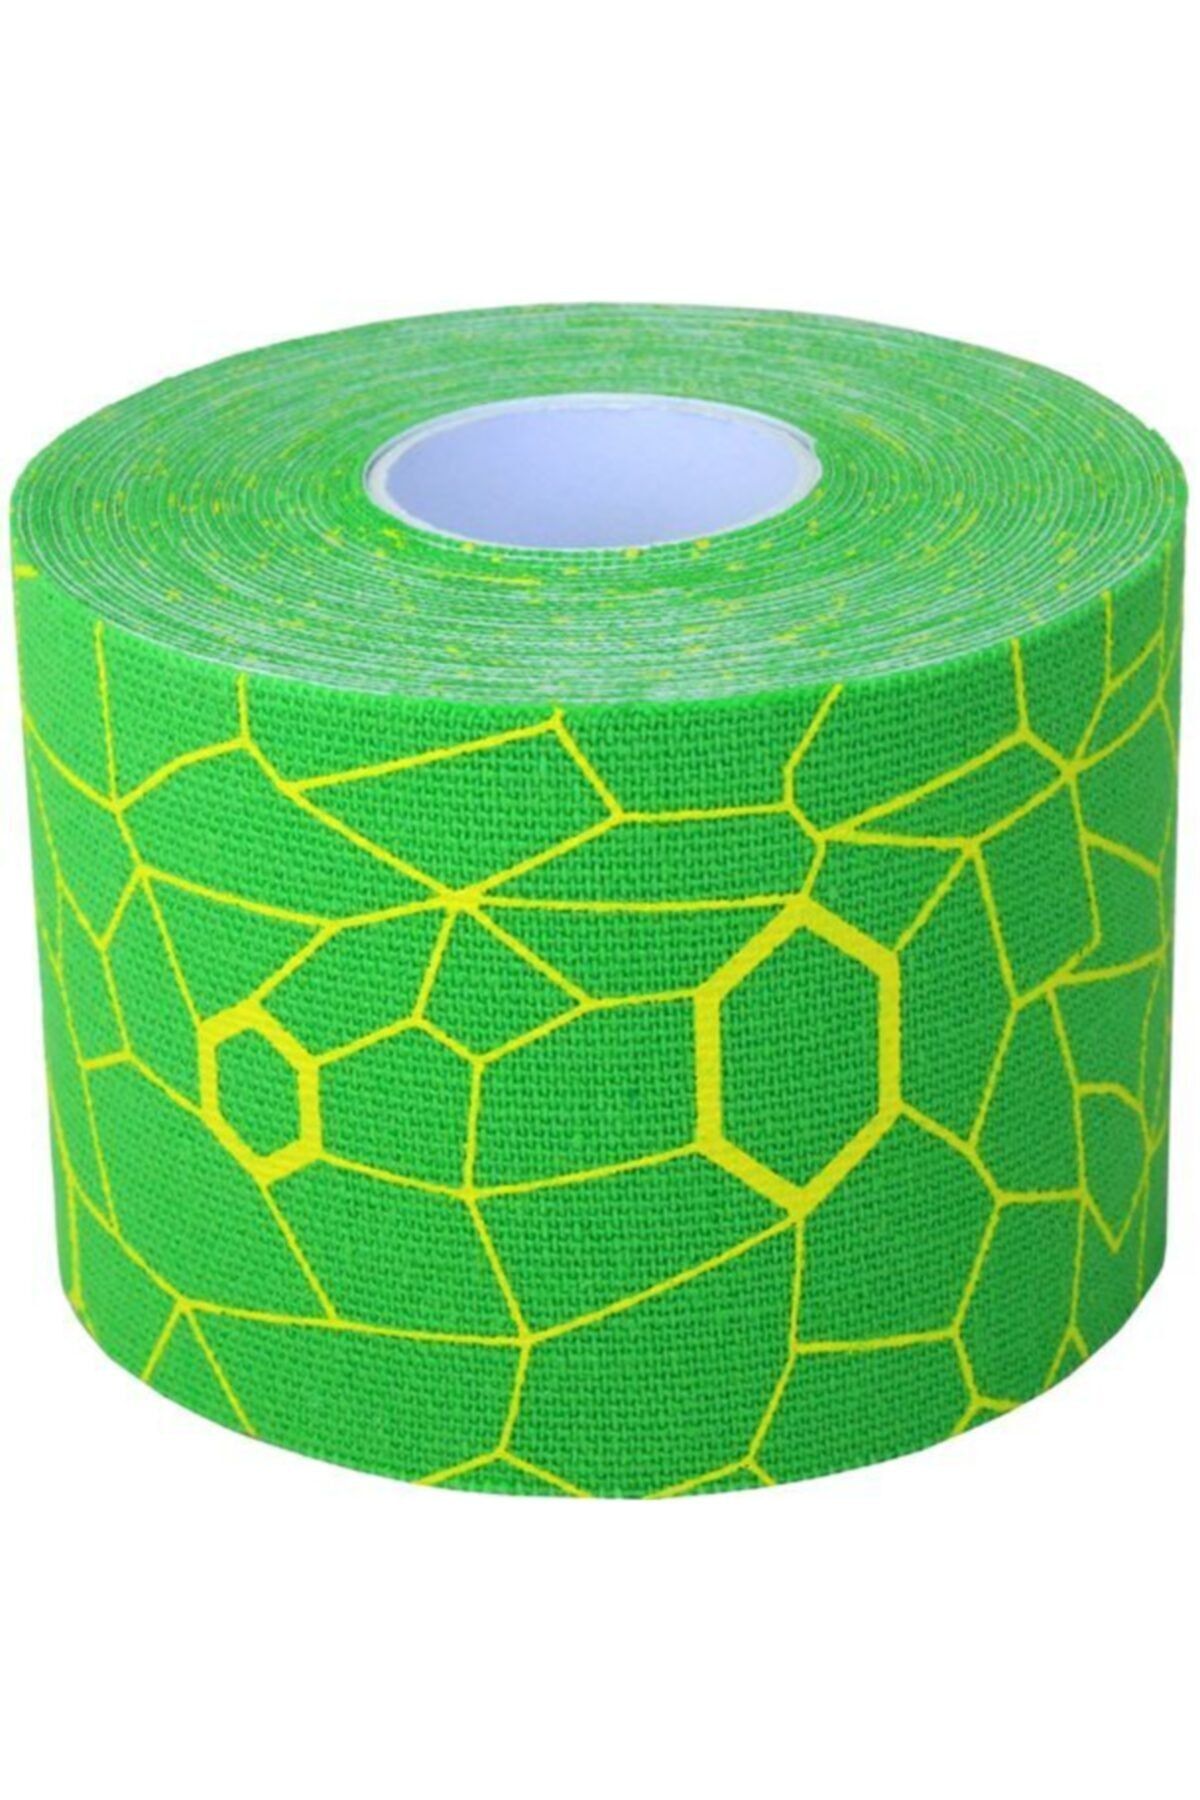 Theraband Kinesiology Tape - Ağrı Bandı Yeşil 5 Cm X 5 Metre